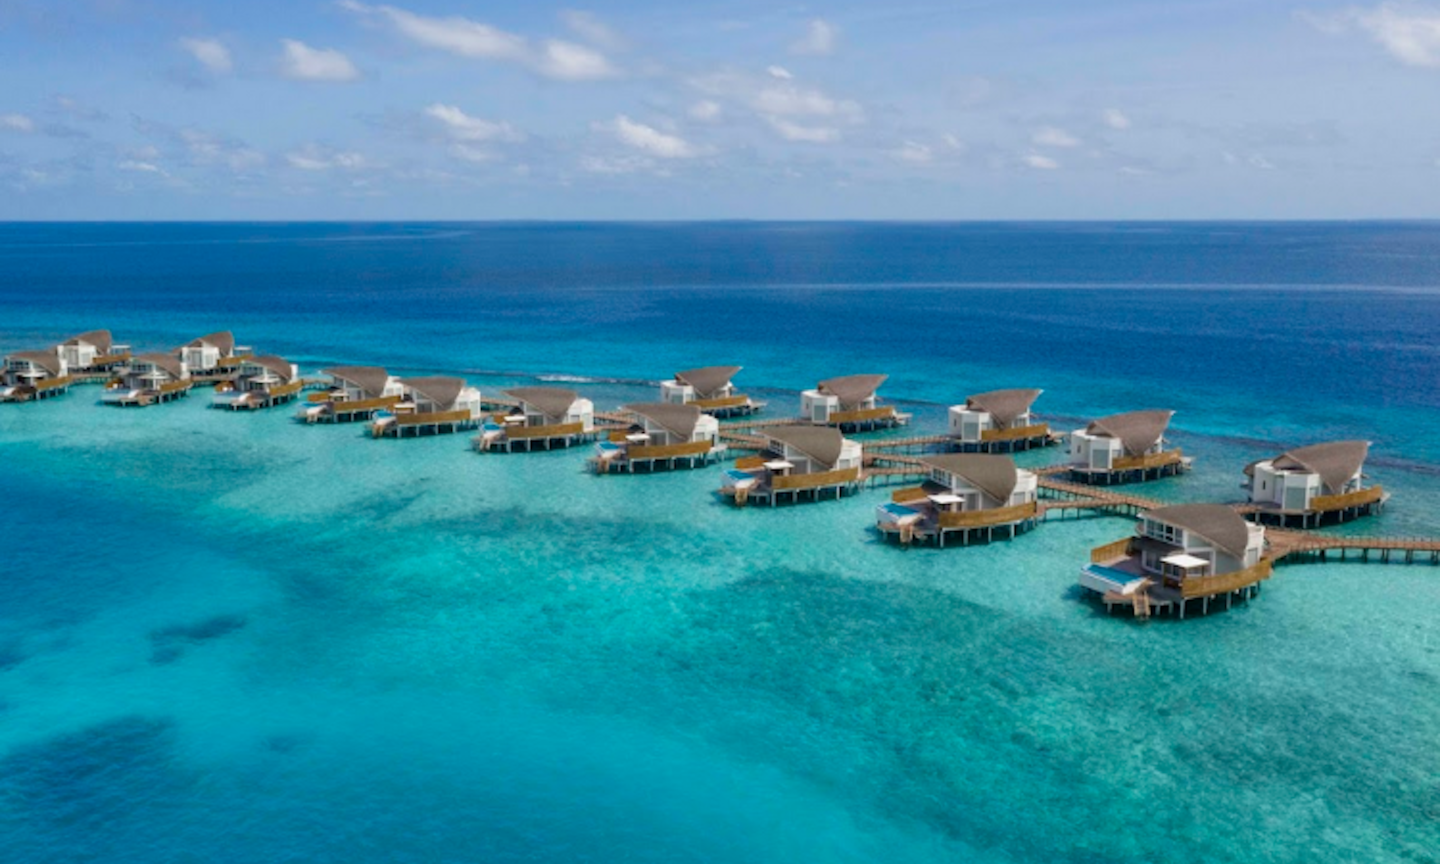 JW Marriott Maldives Evaluate – NerdWallet